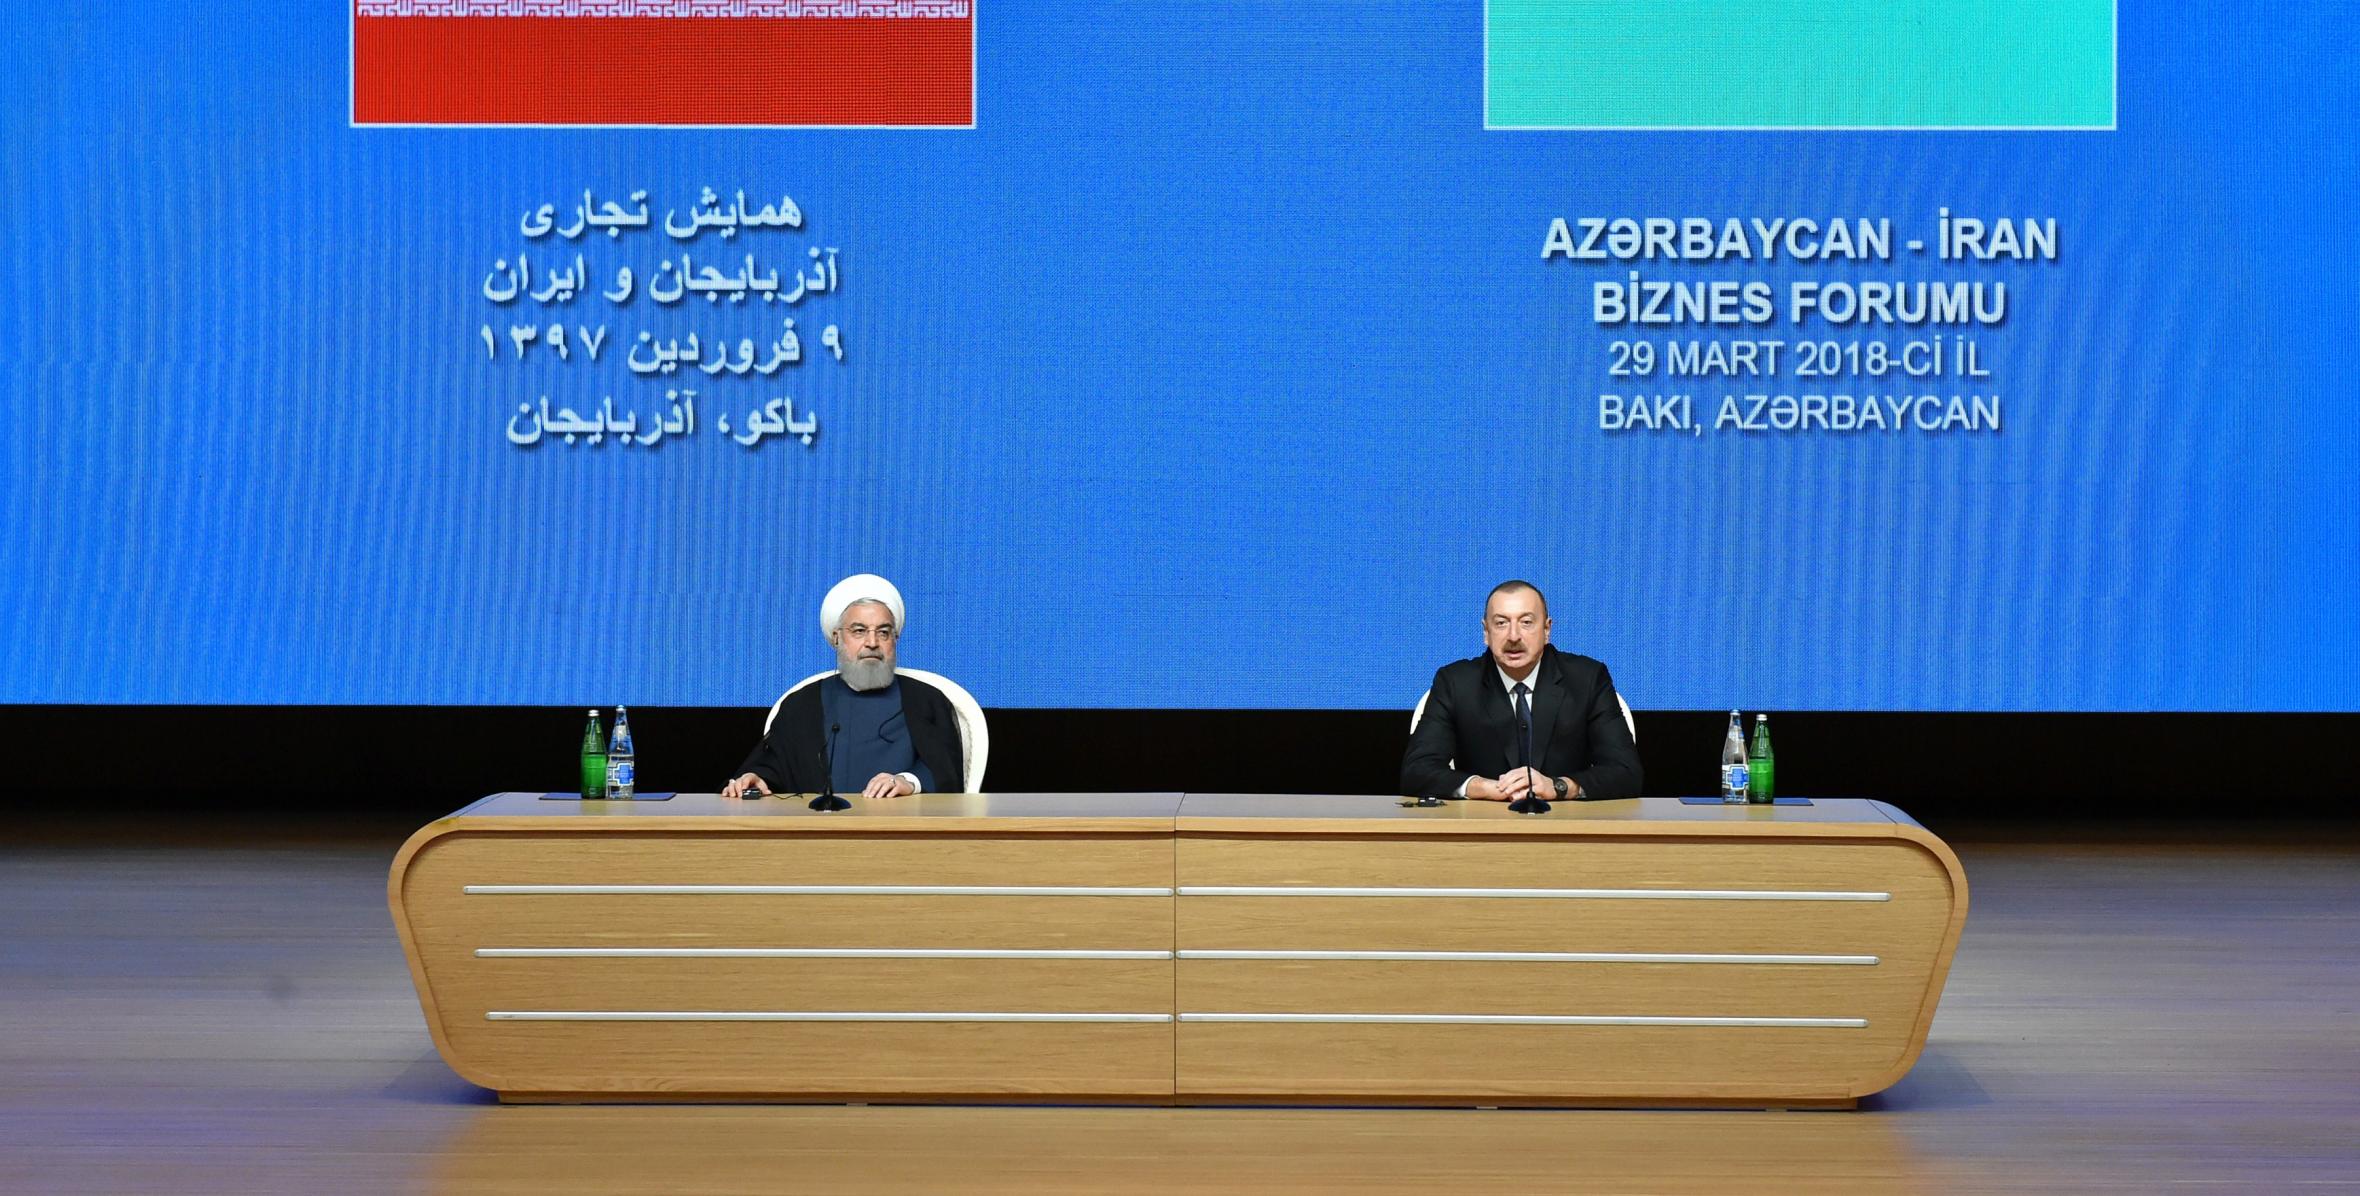 Azerbaijan-Iran business forum held in Baku